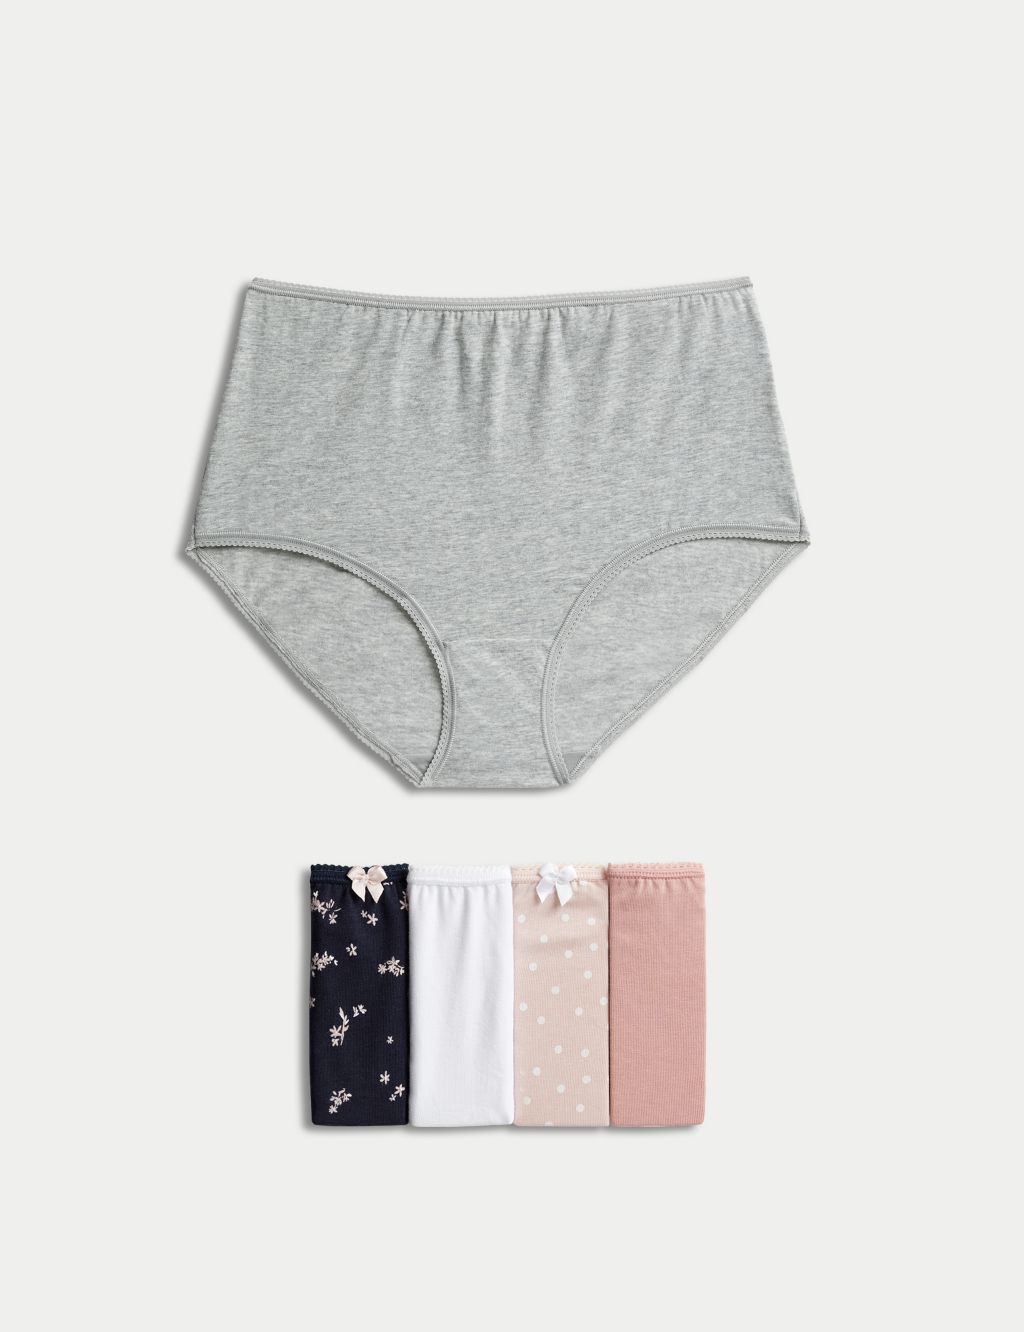 Reebok Girls 5 Pack Large 12/14 Boyshorts Underwear - Pink White Blue Gray  for sale online